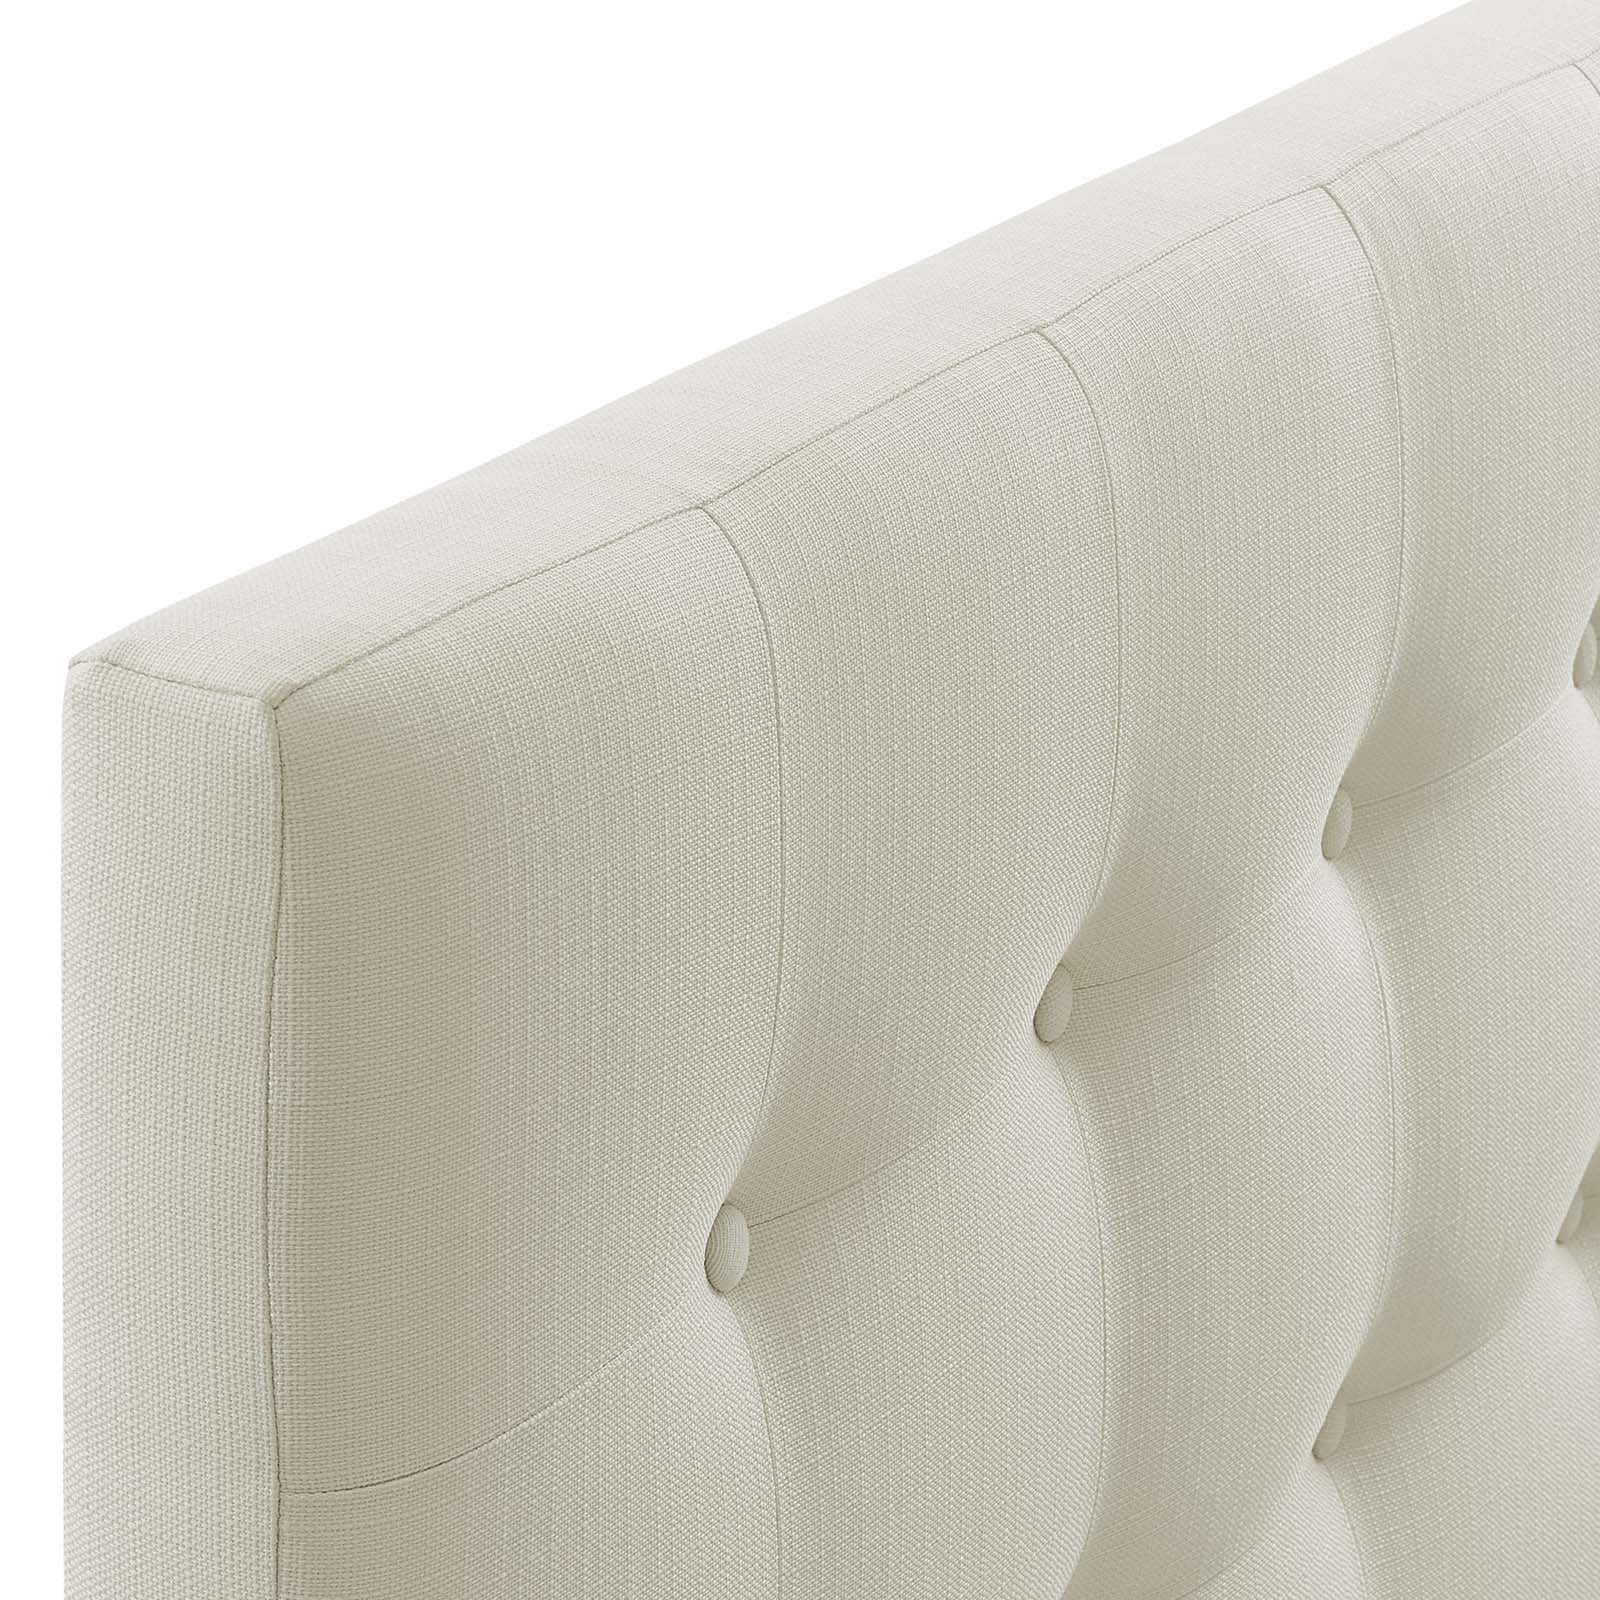 Emily Upholstered Fabric Headboard - East Shore Modern Home Furnishings